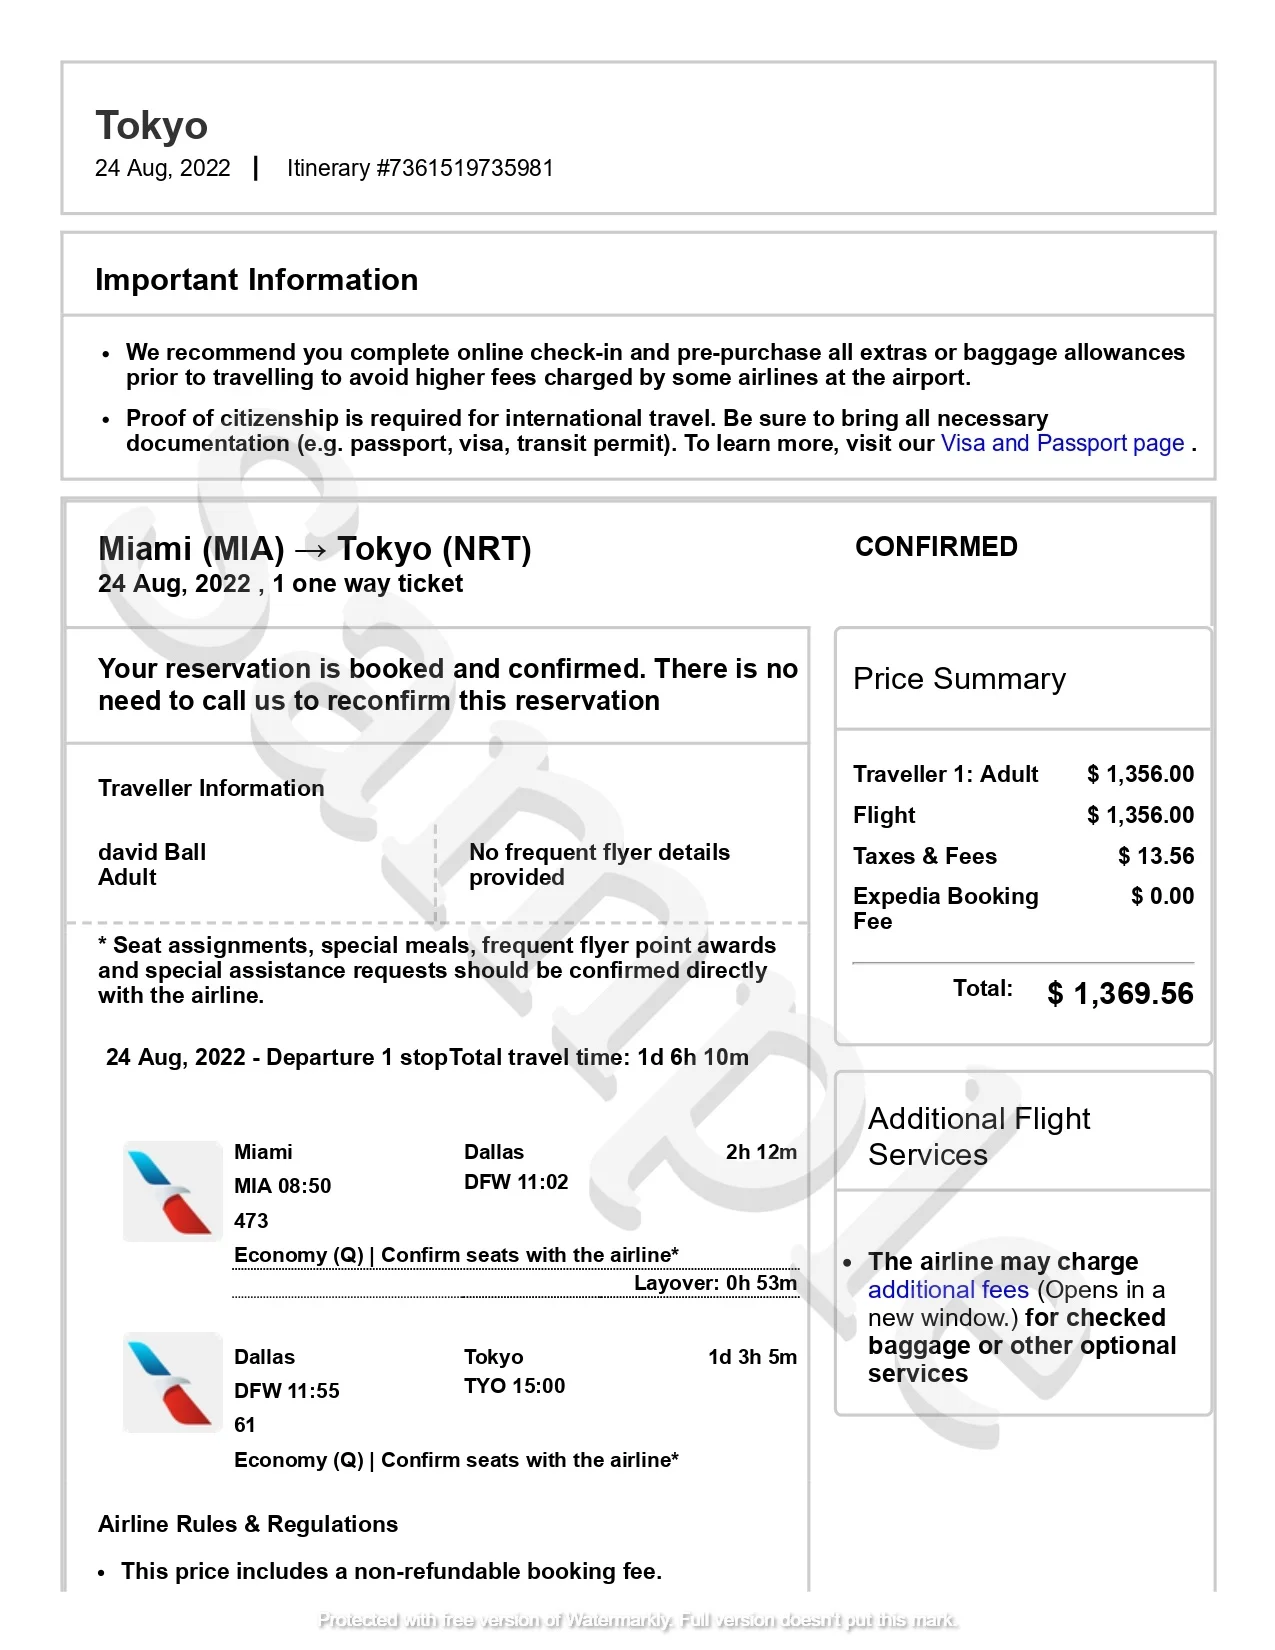 flight dummy ticket sample image